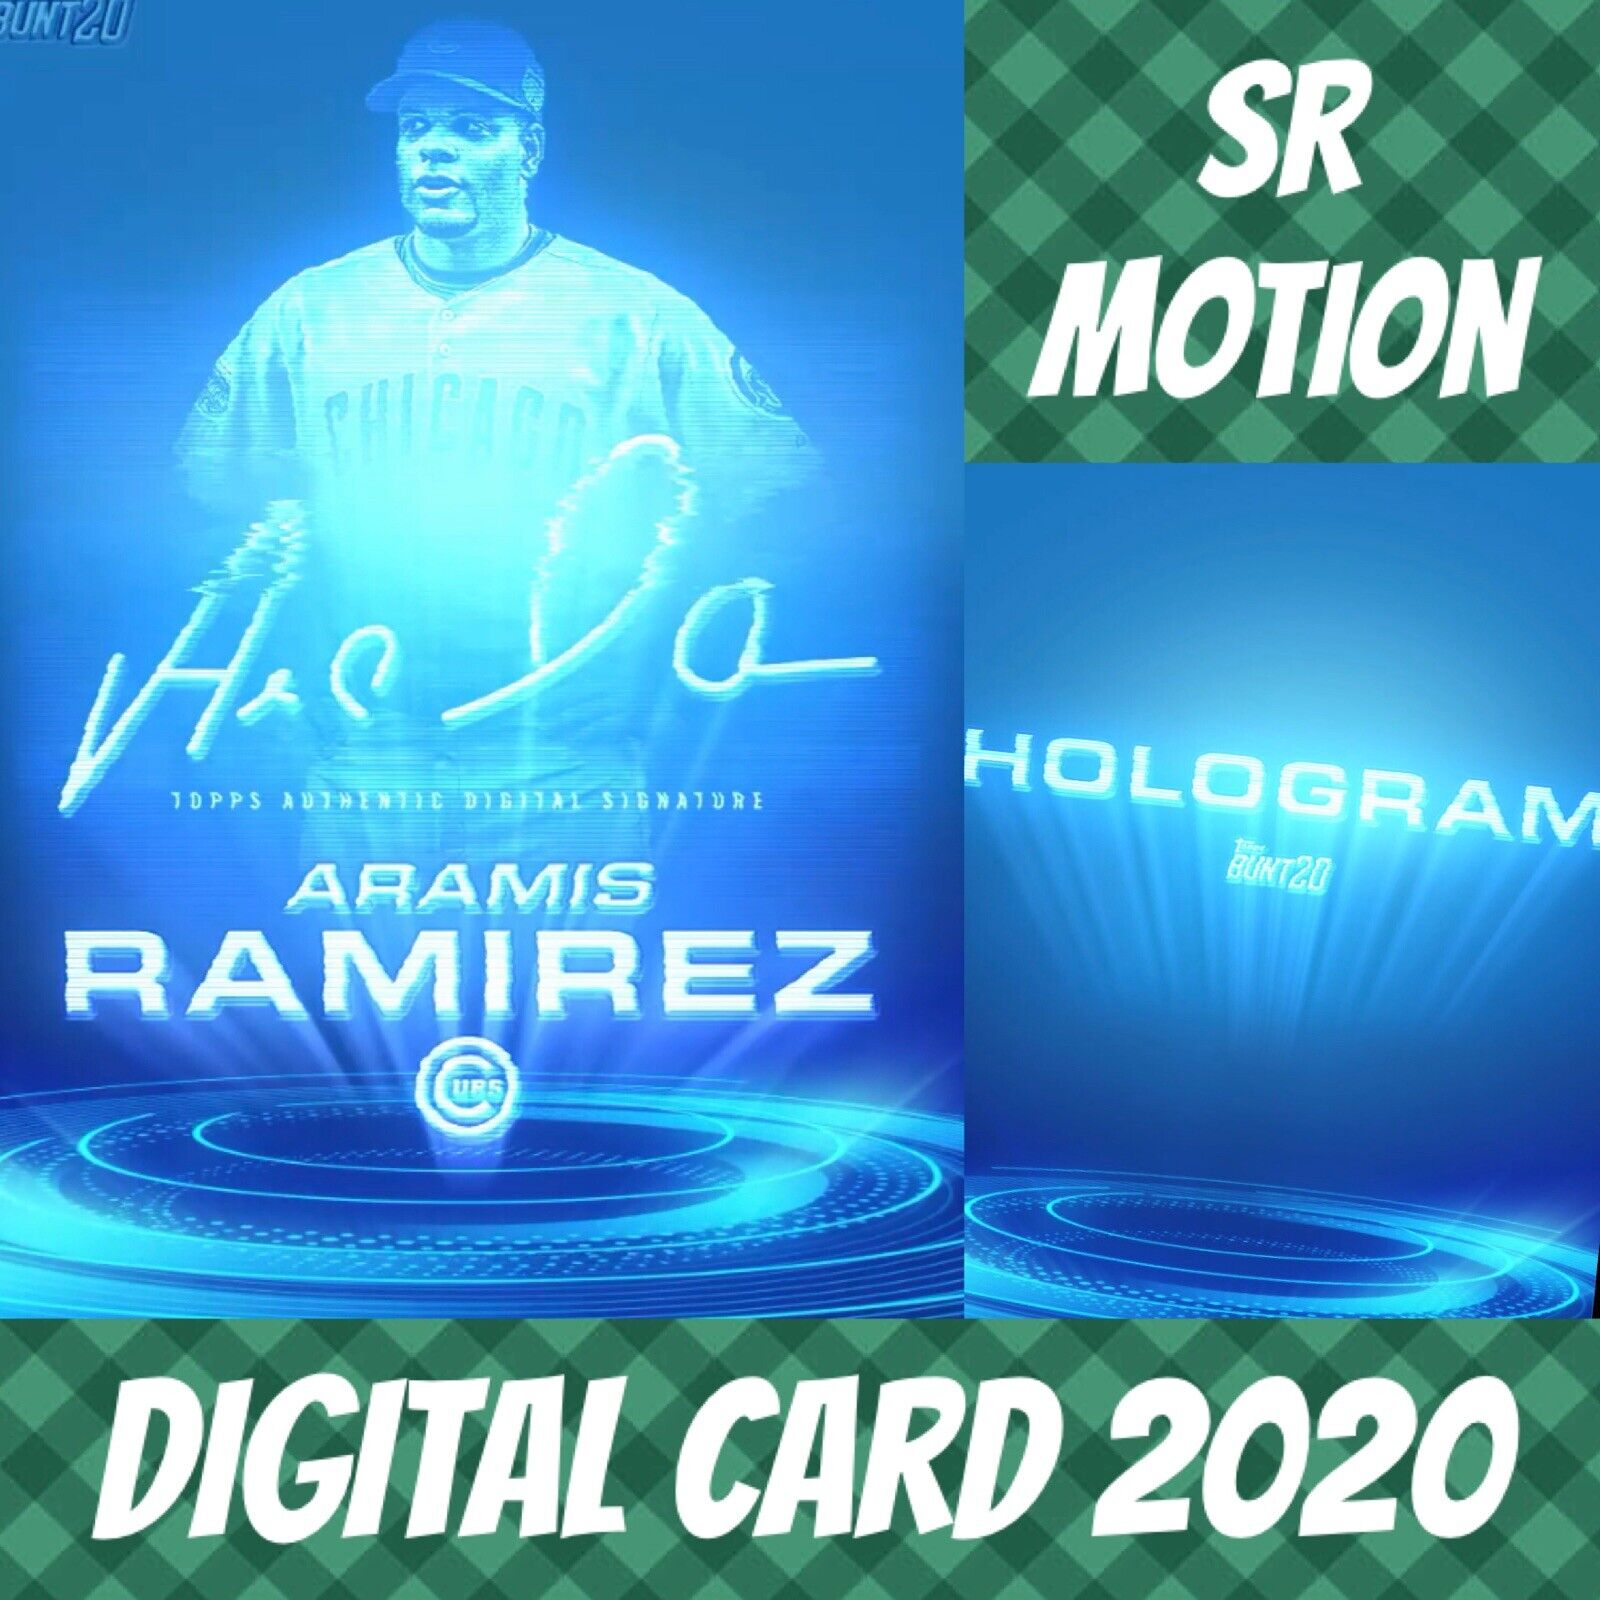 Topps bunt digital aramis ramirez hologram motion signature 2020 digital